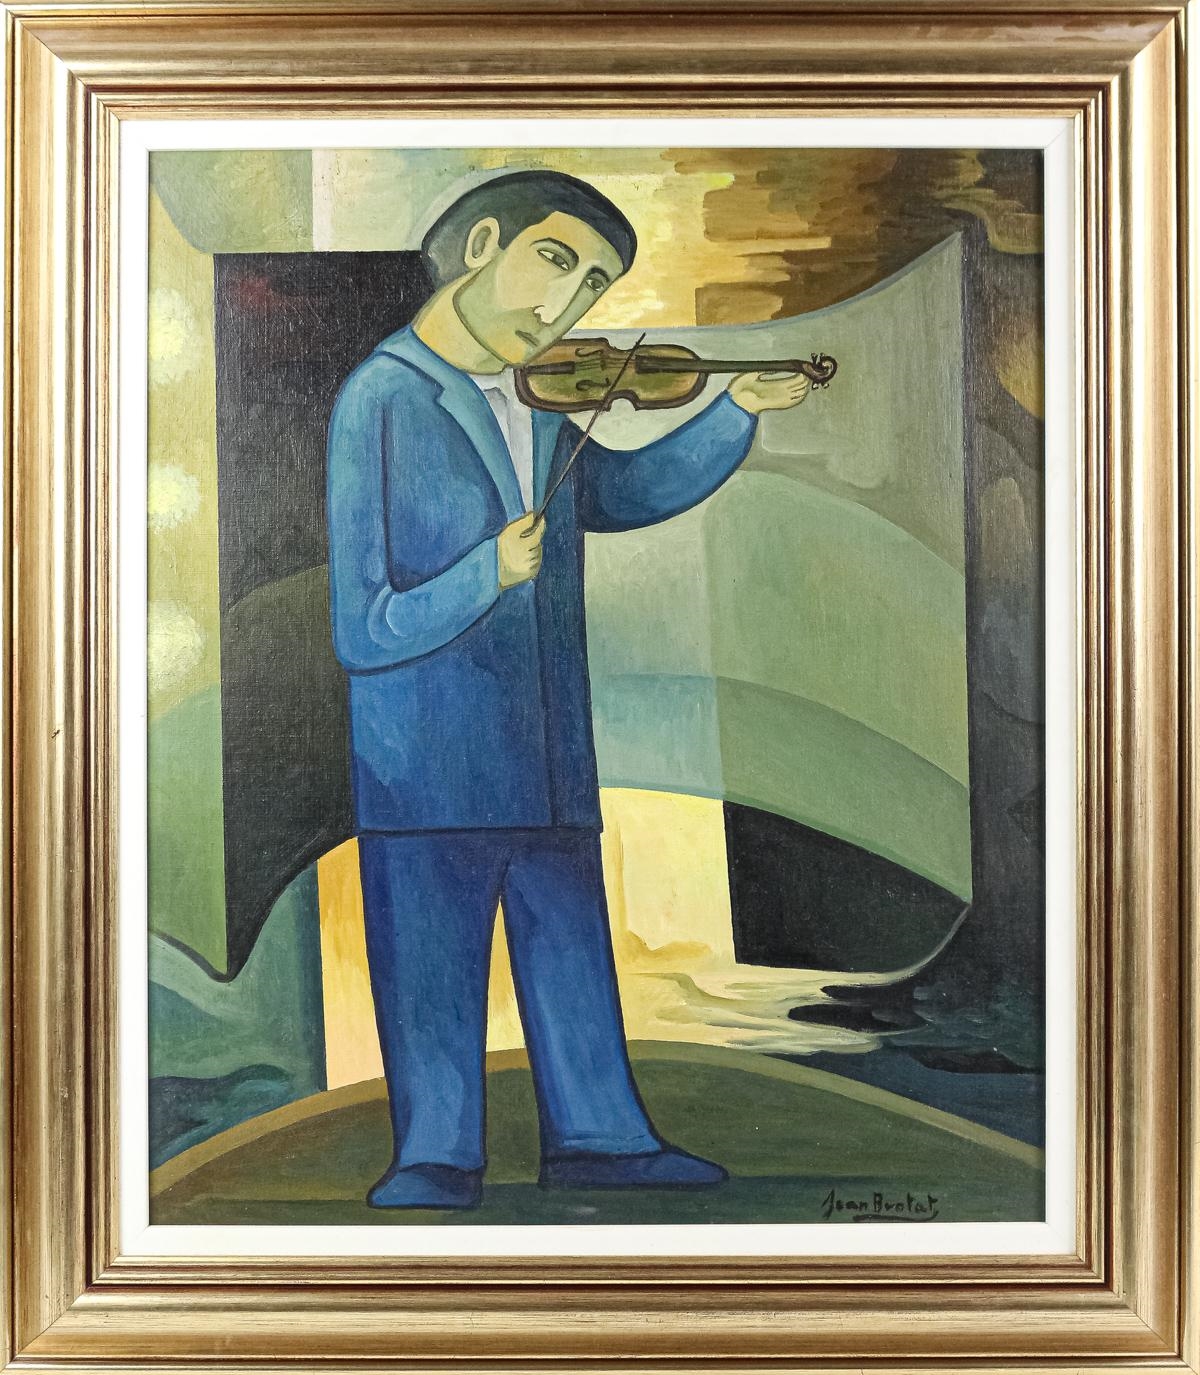 Artwork by Joan Brotat Vilanova , Personaje tocando el violín, Made of oil on canvas